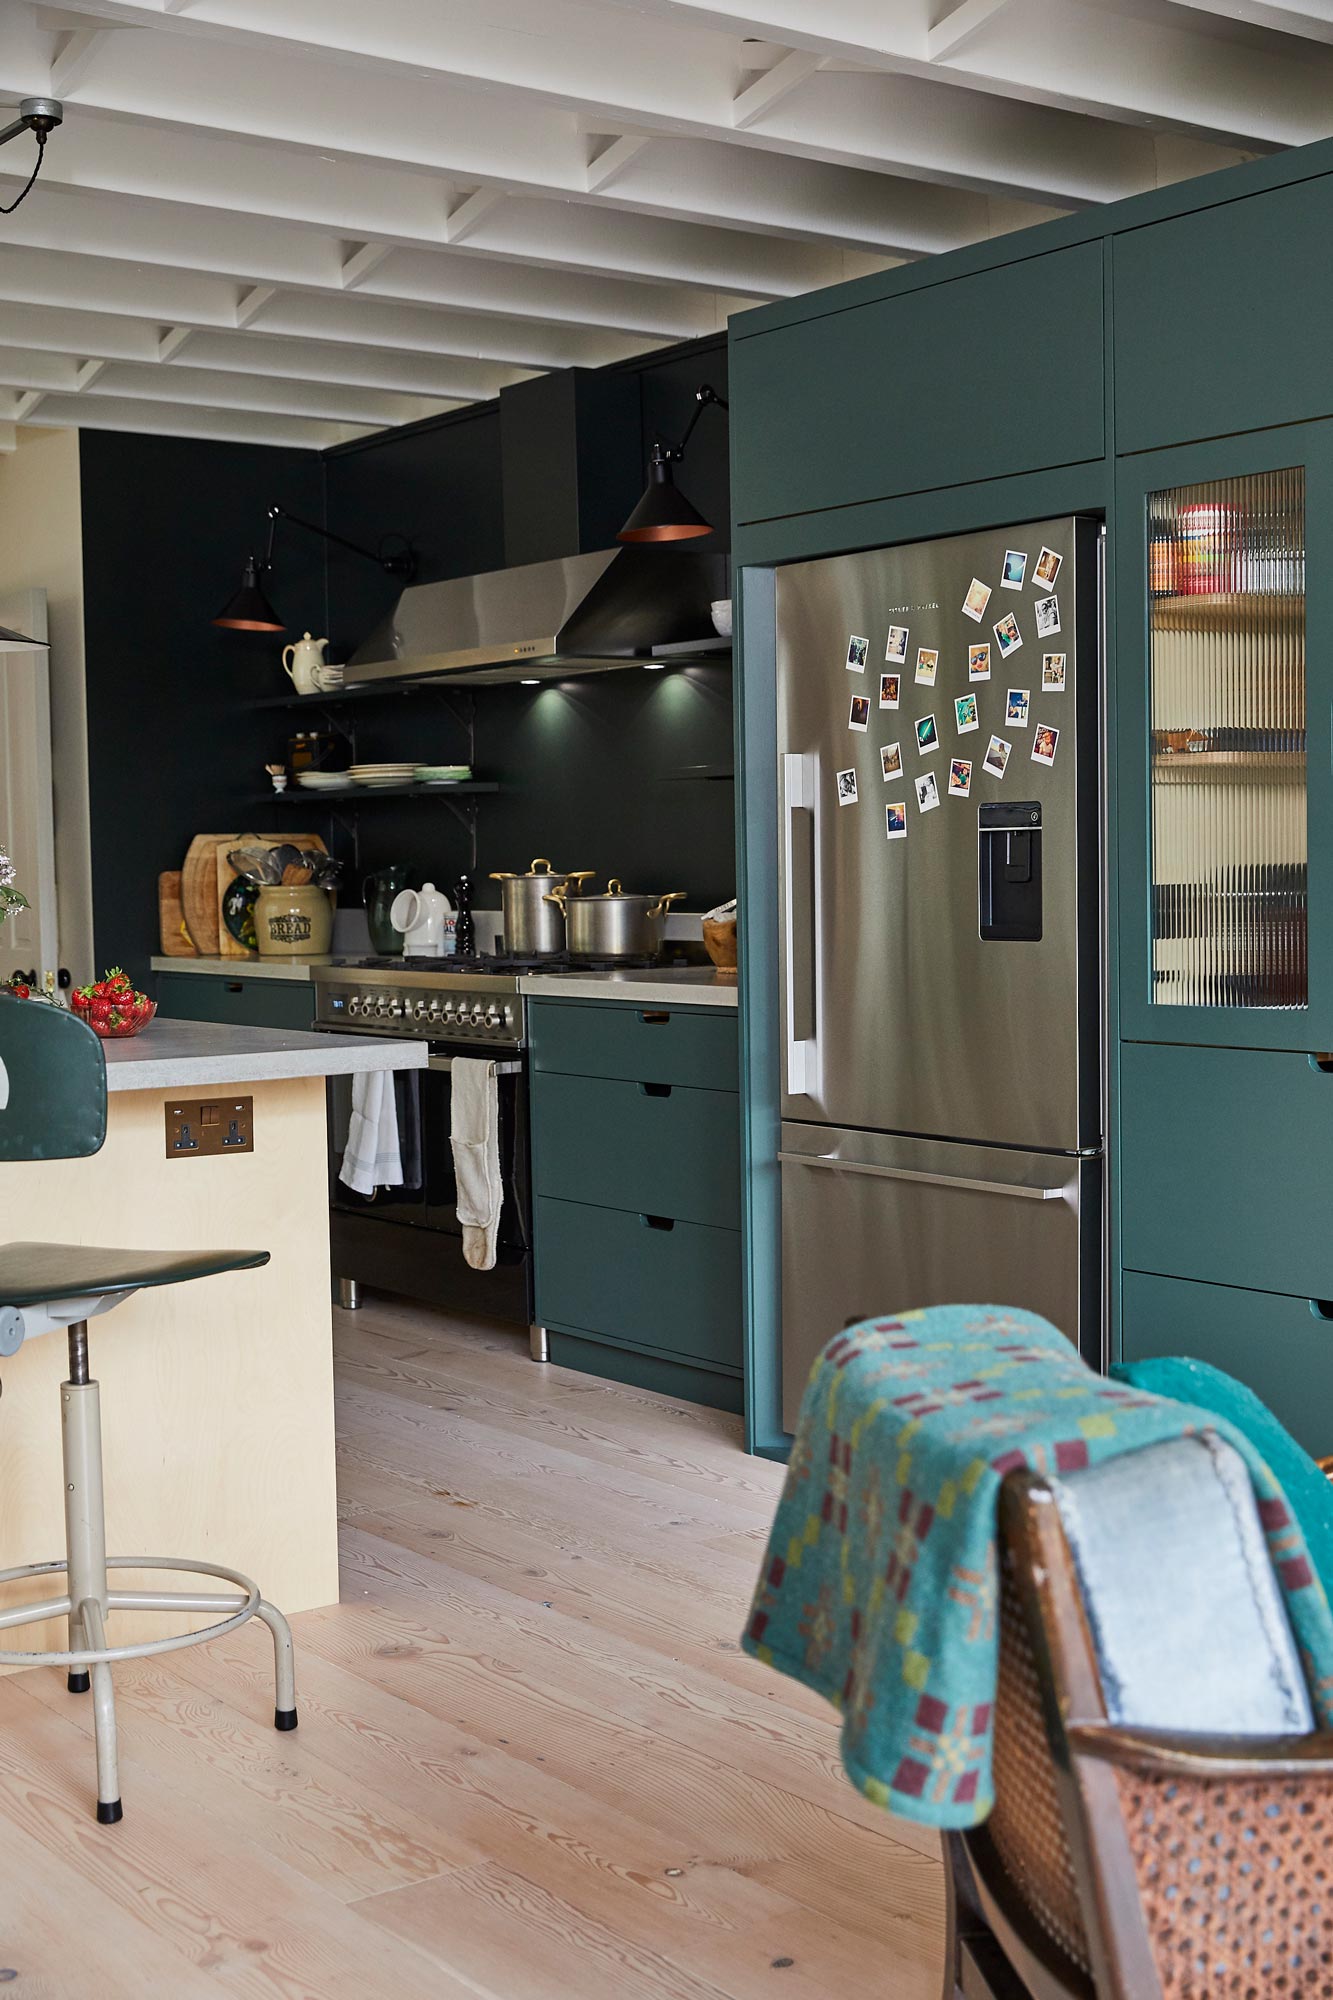 Freestanding stainless steel Fisher & Paykel fridge freezer in bespoke green kitchen